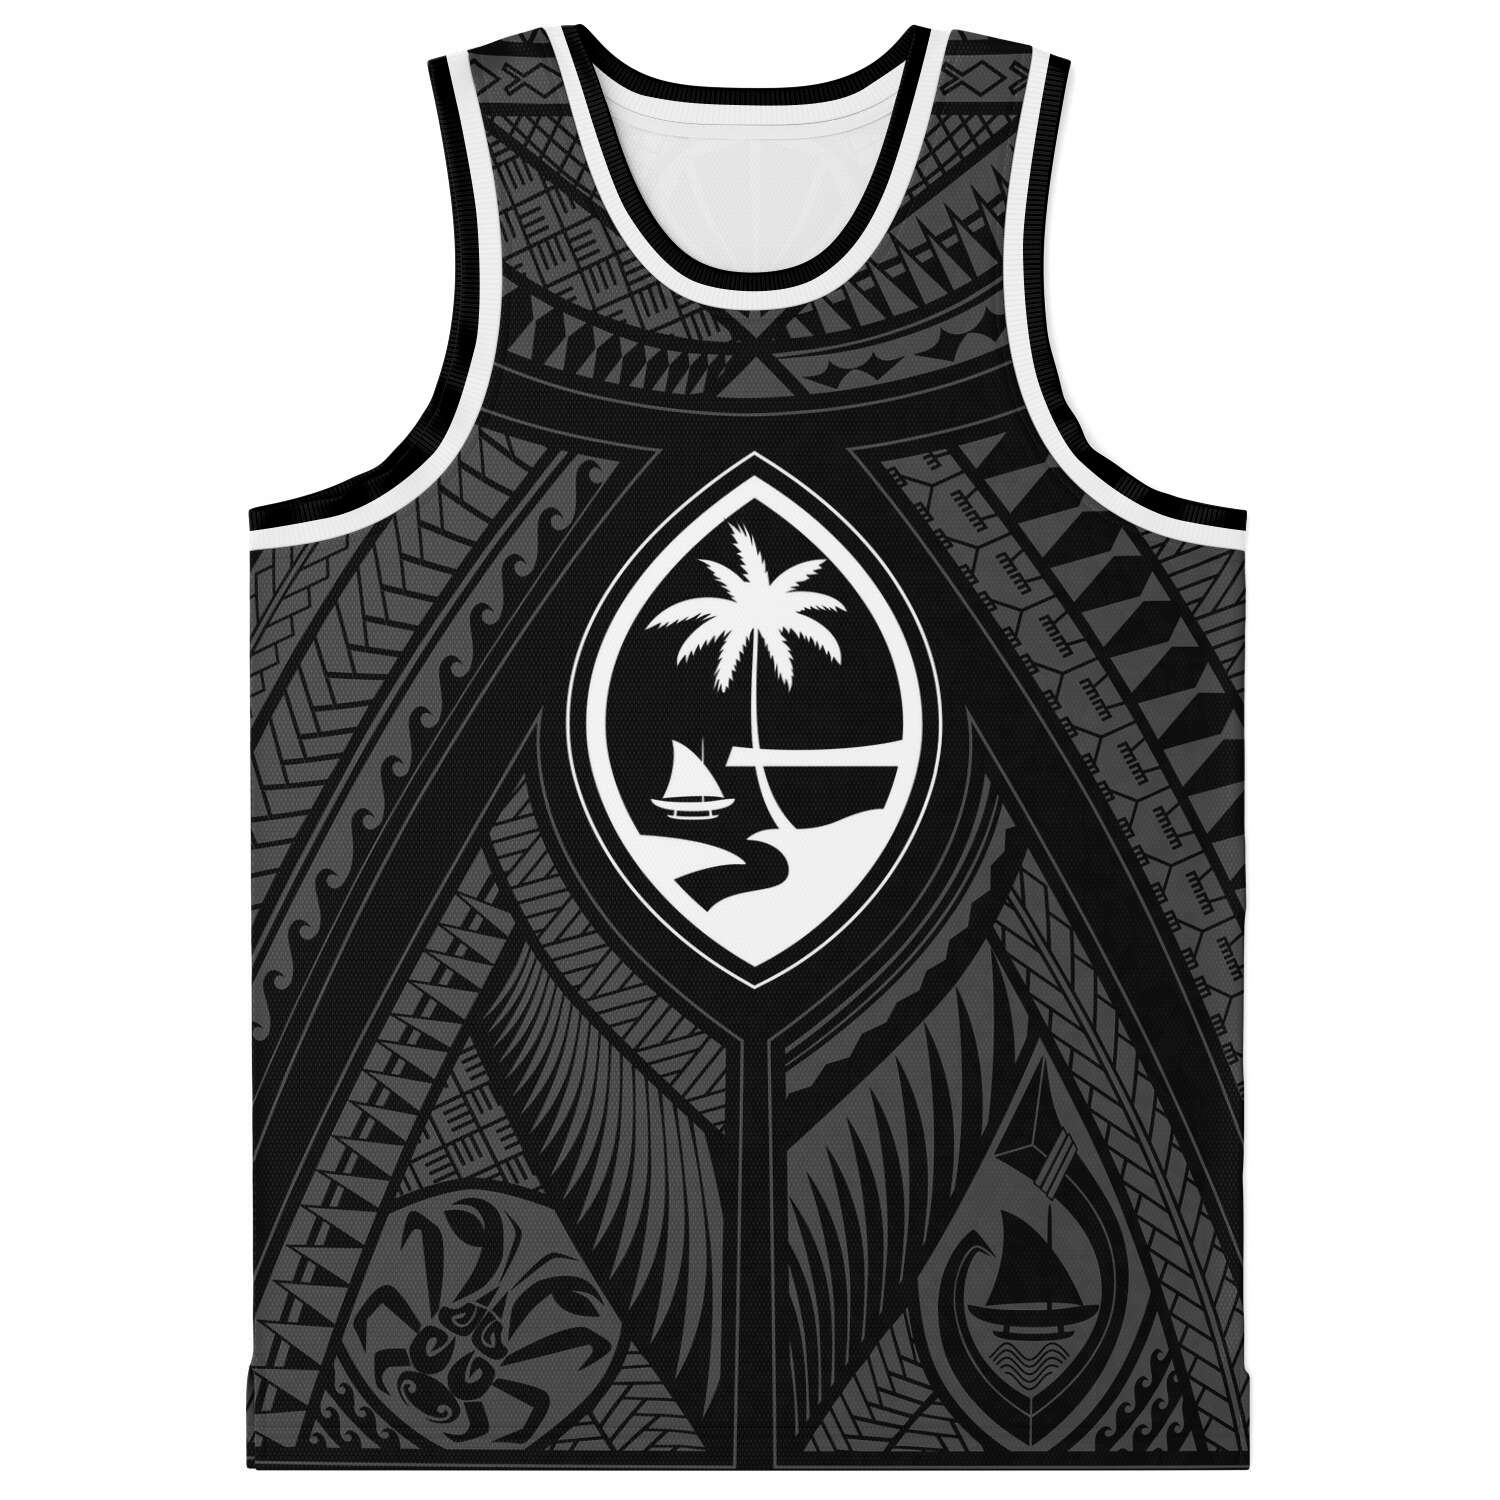 Subliminator Guahan Tribal Basketball Jersey 2XL